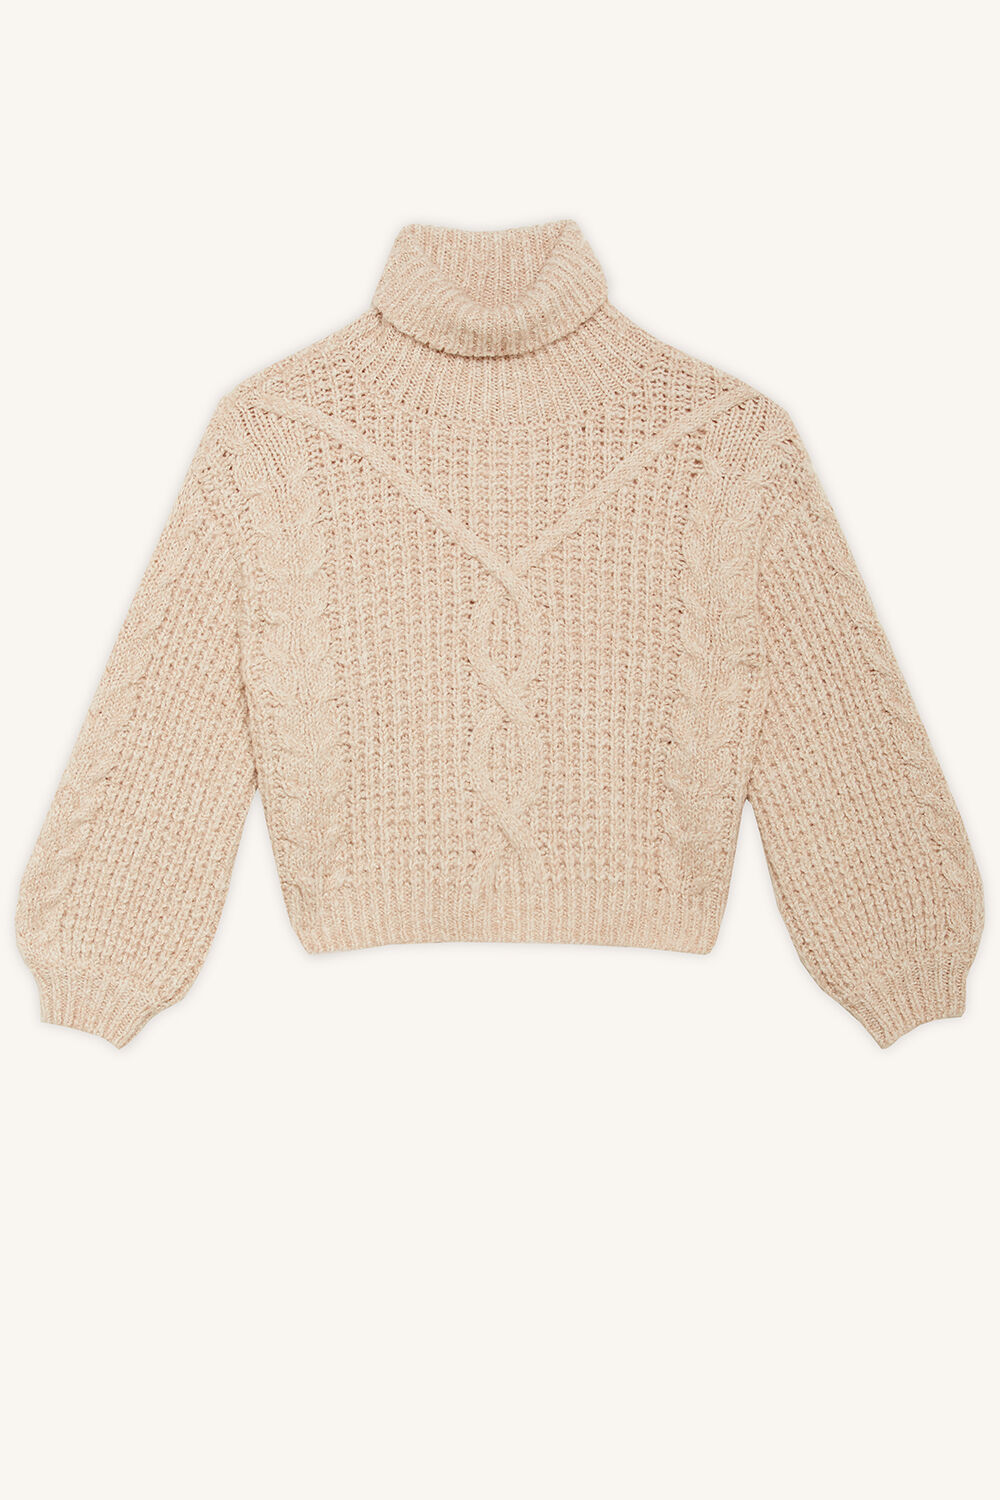 Kara Cable Knit | Tween Girls 7-16 Knitwear | Bardot Junior